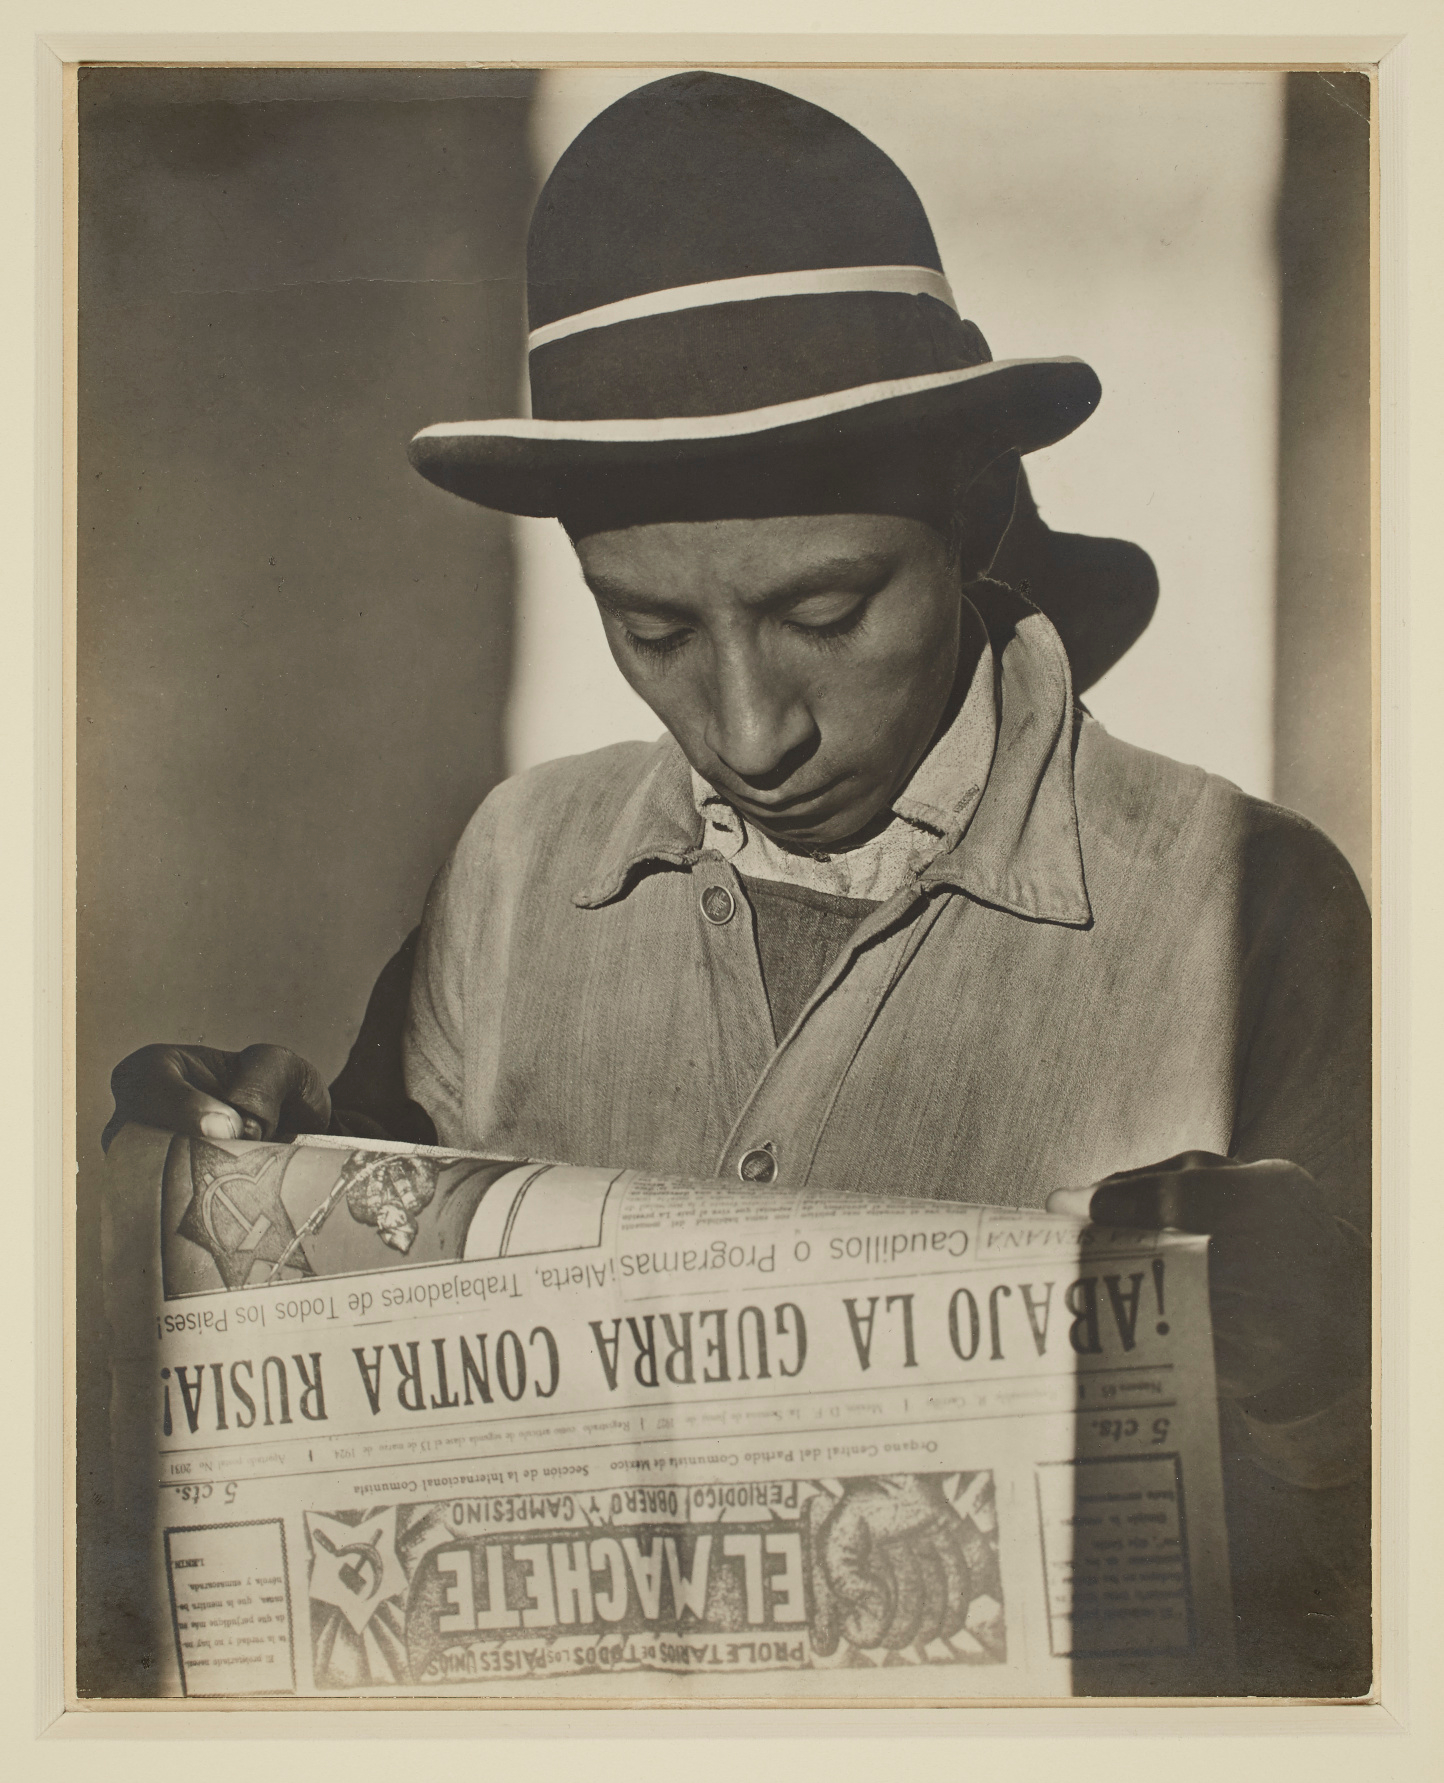     Tina Modotti, El Machete, 1926. Gelatin silver print, Sheet: 23.8 × 18.8 cm. Gift of Harry and Ann Malcolmson, 2015 © Art Gallery of Ontario 2015/248. AGO.114618.

